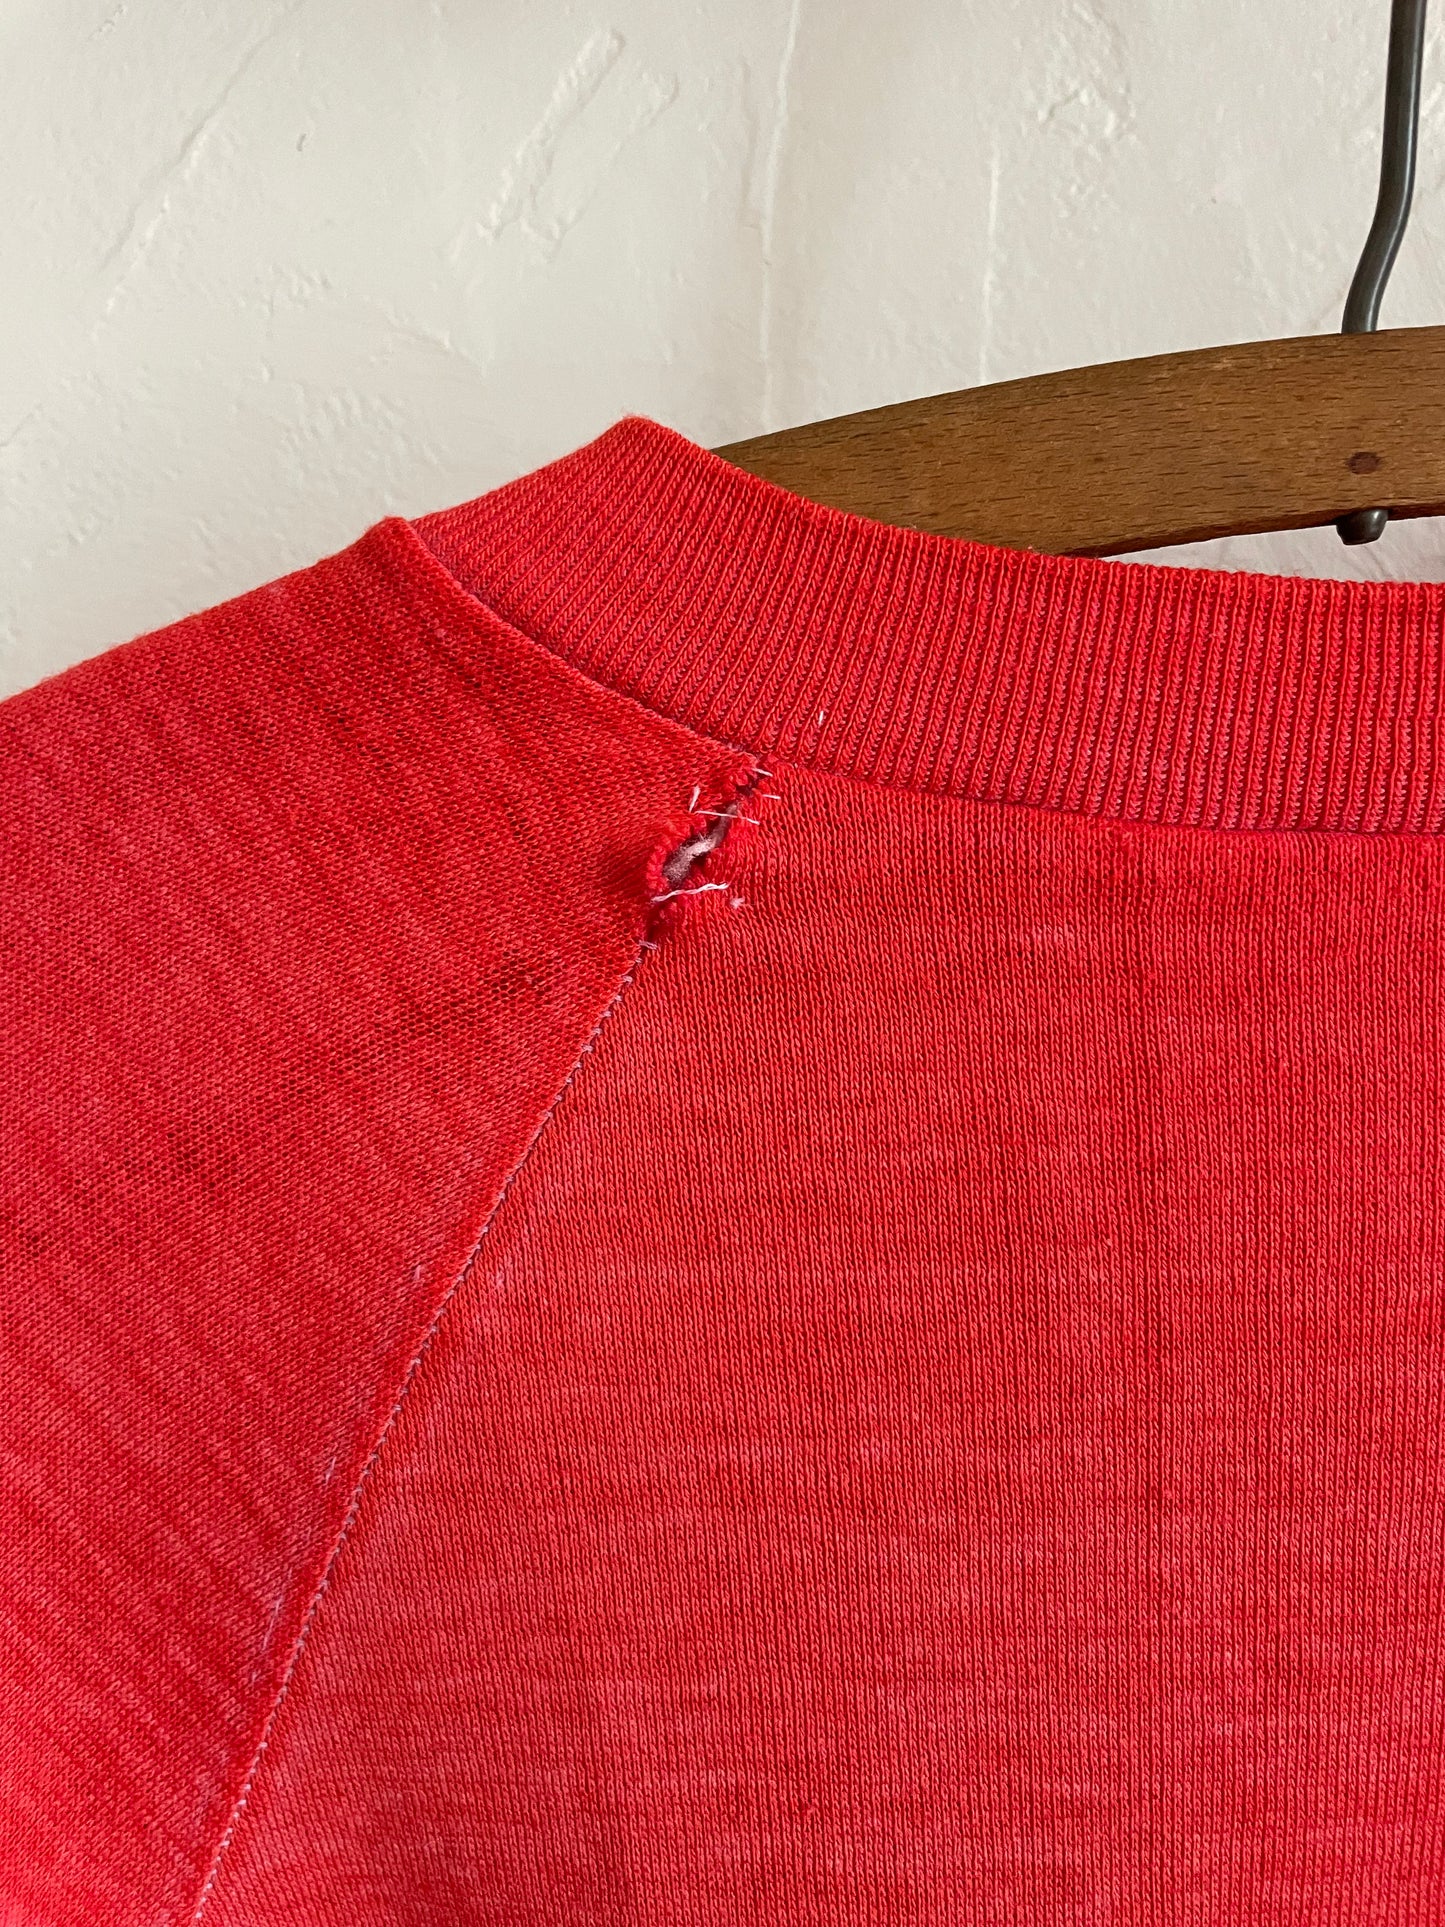 70s Blank Bright Red Sweatshirt